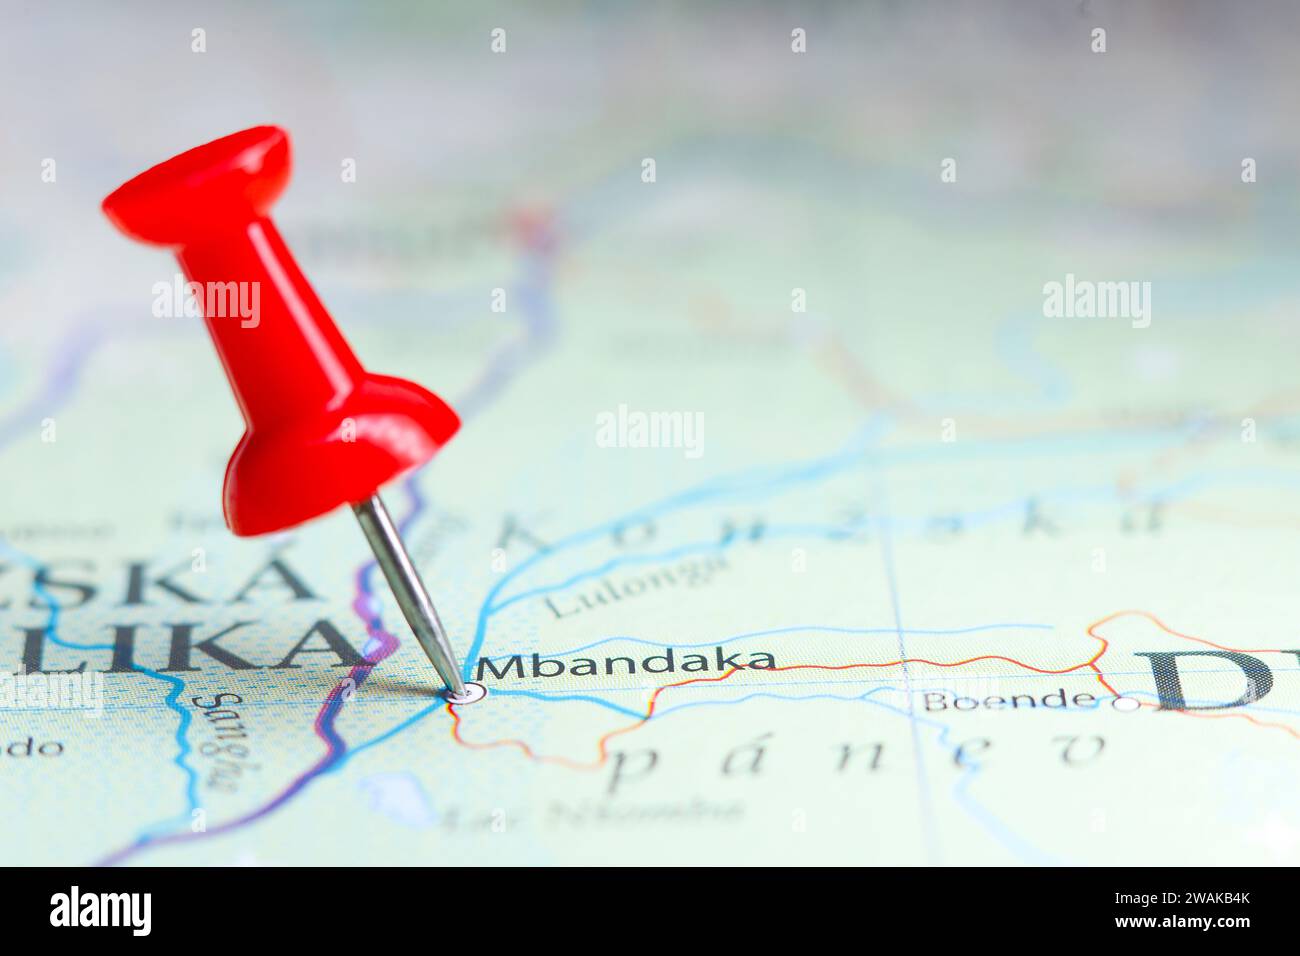 Mbandaka, Democratic Republic of the Congo pin on map Stock Photo